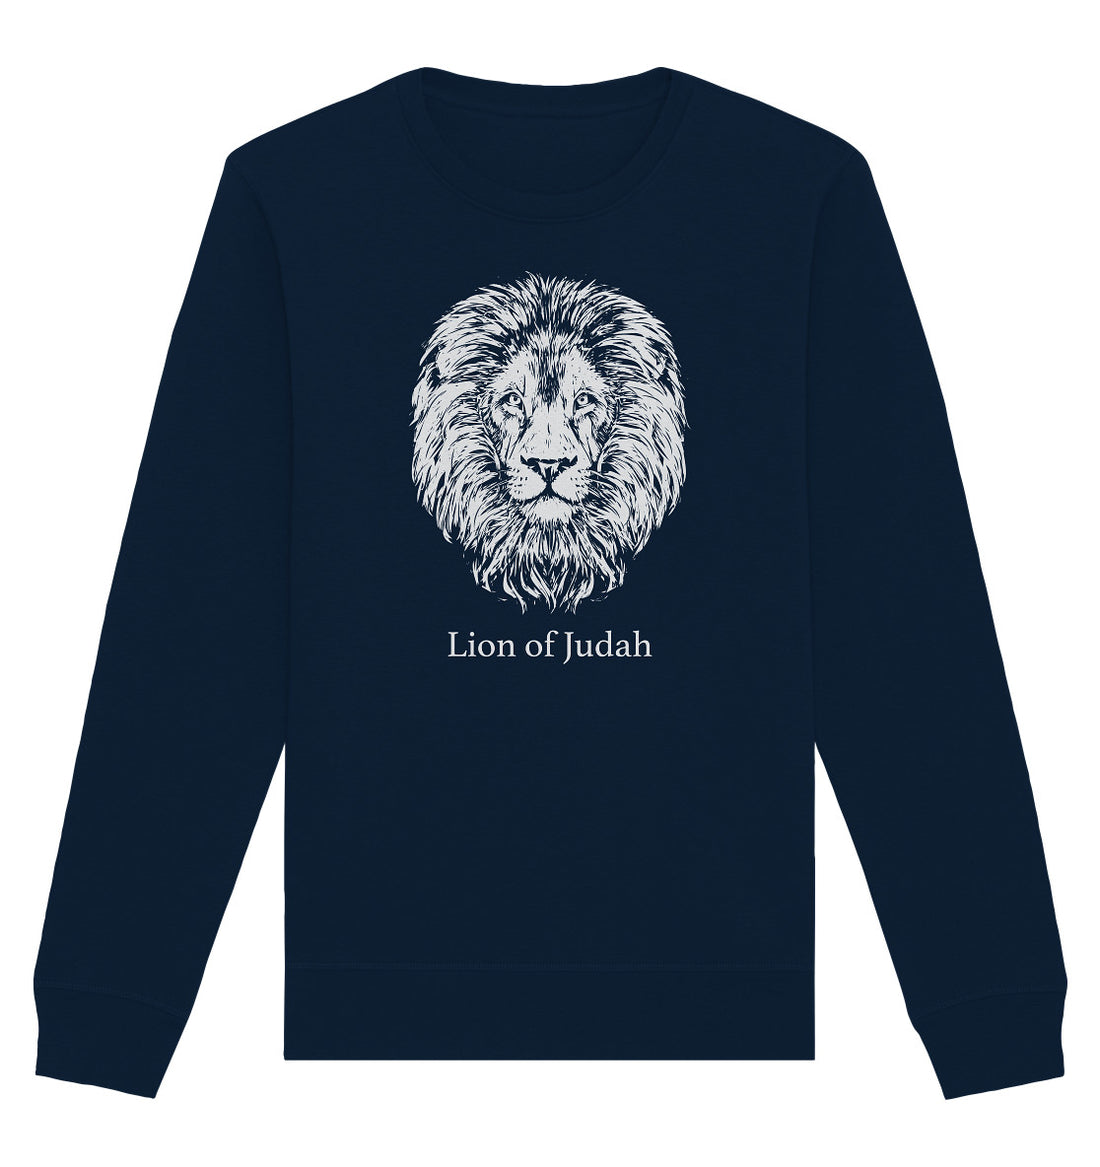 Offb 5,5 - Lion of Judah - weiß - Organic Basic Unisex Sweatshirt